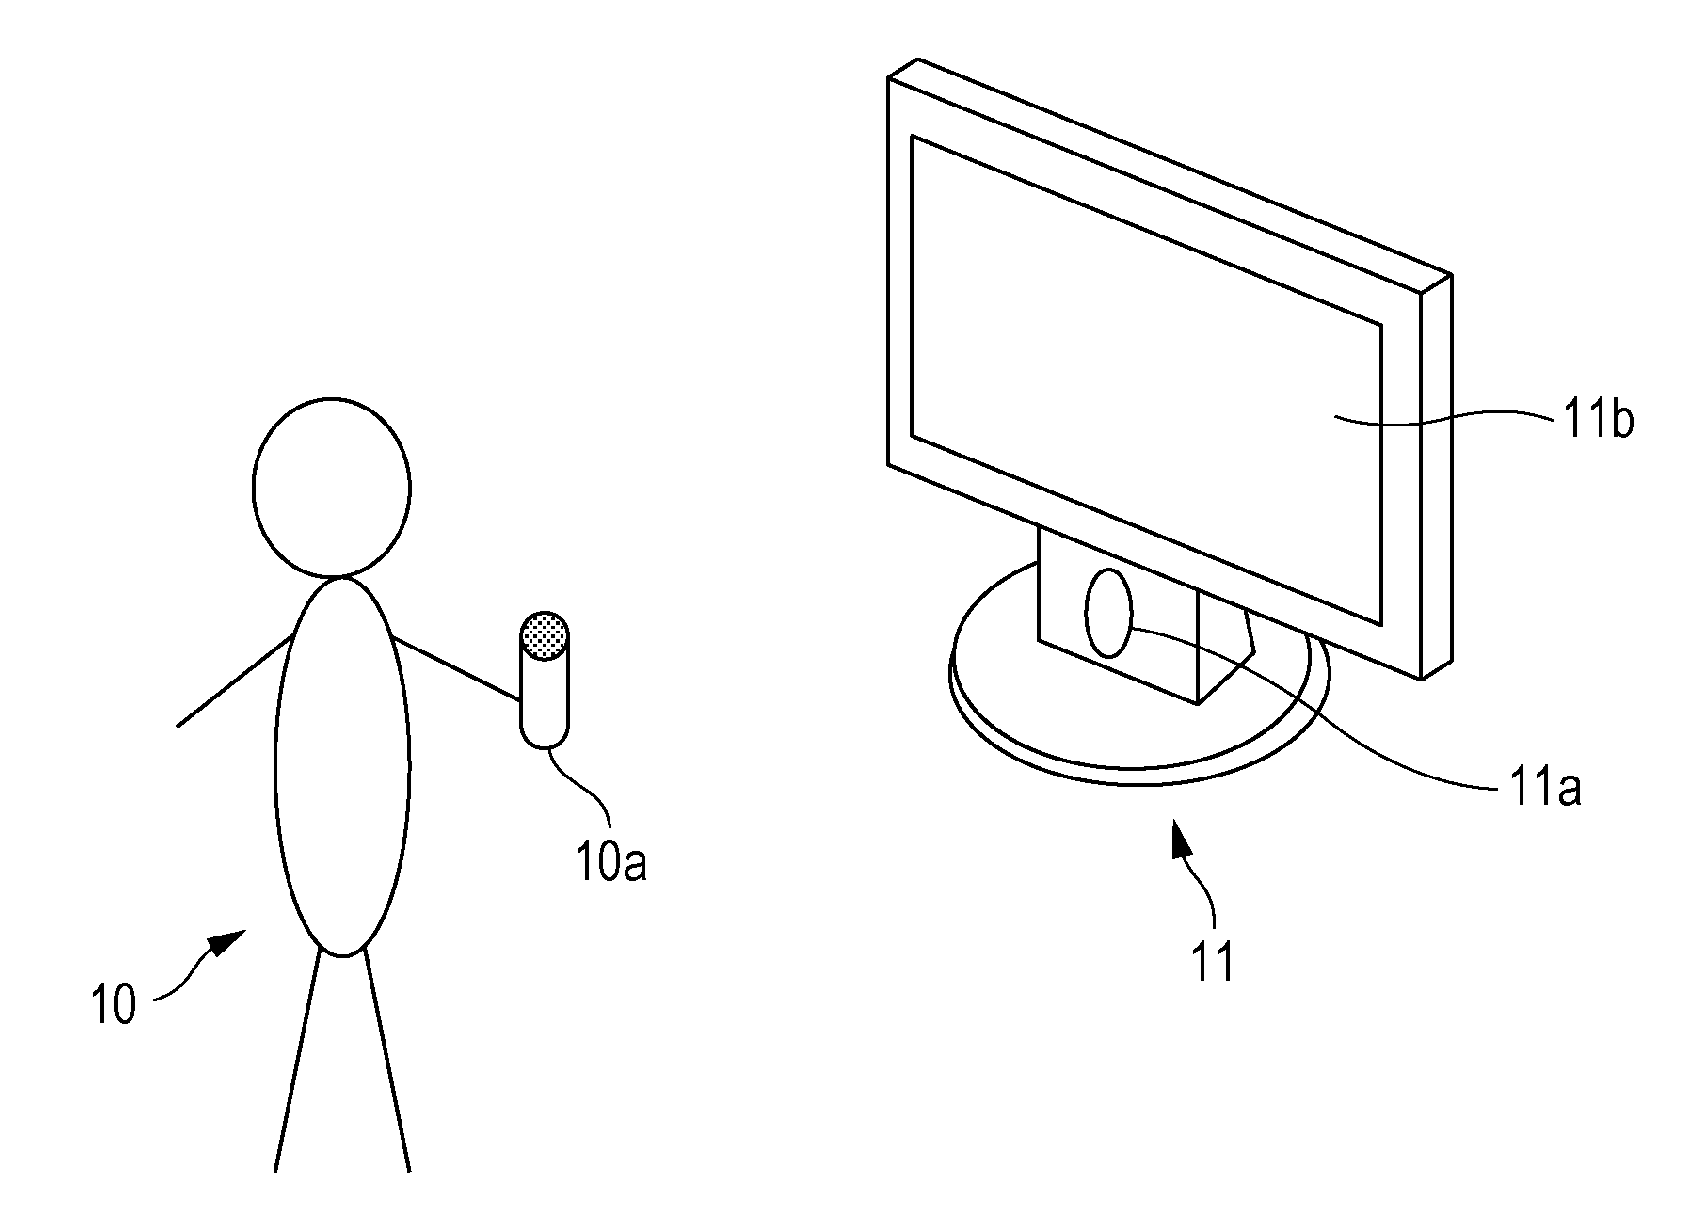 Display control device, method, and program